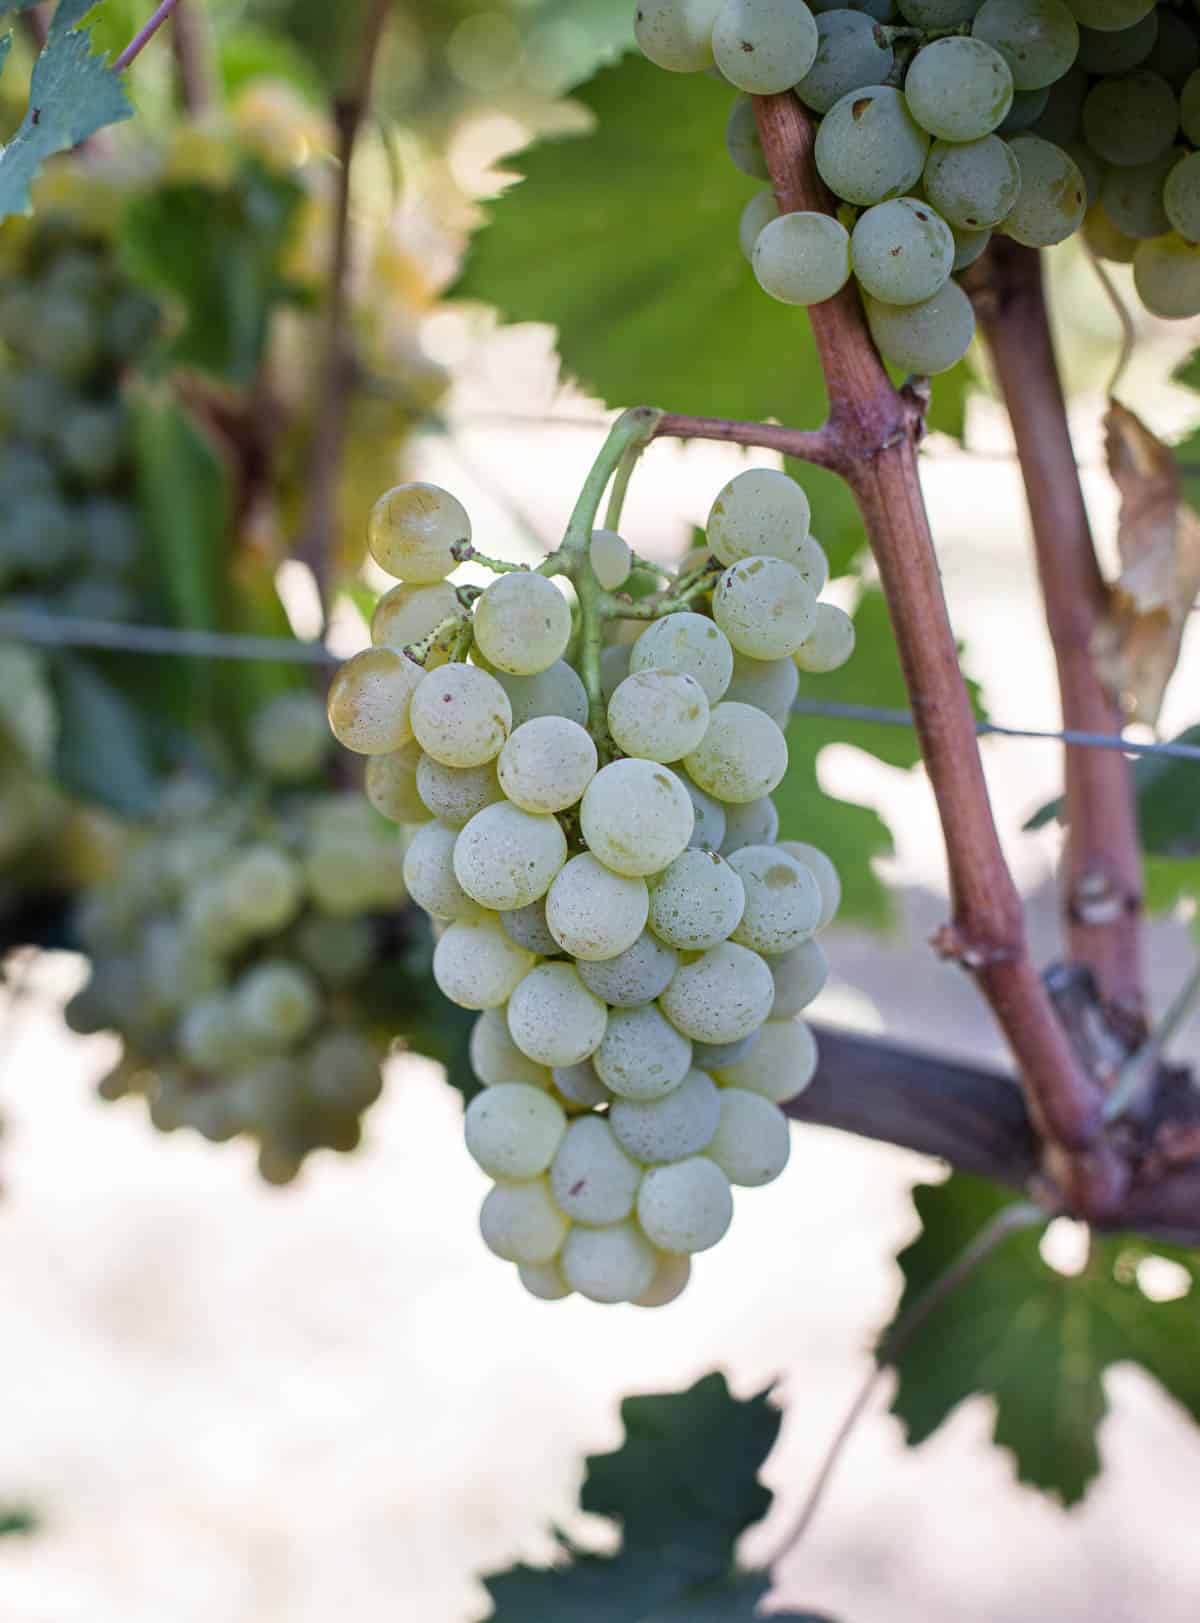 Carricante grapes